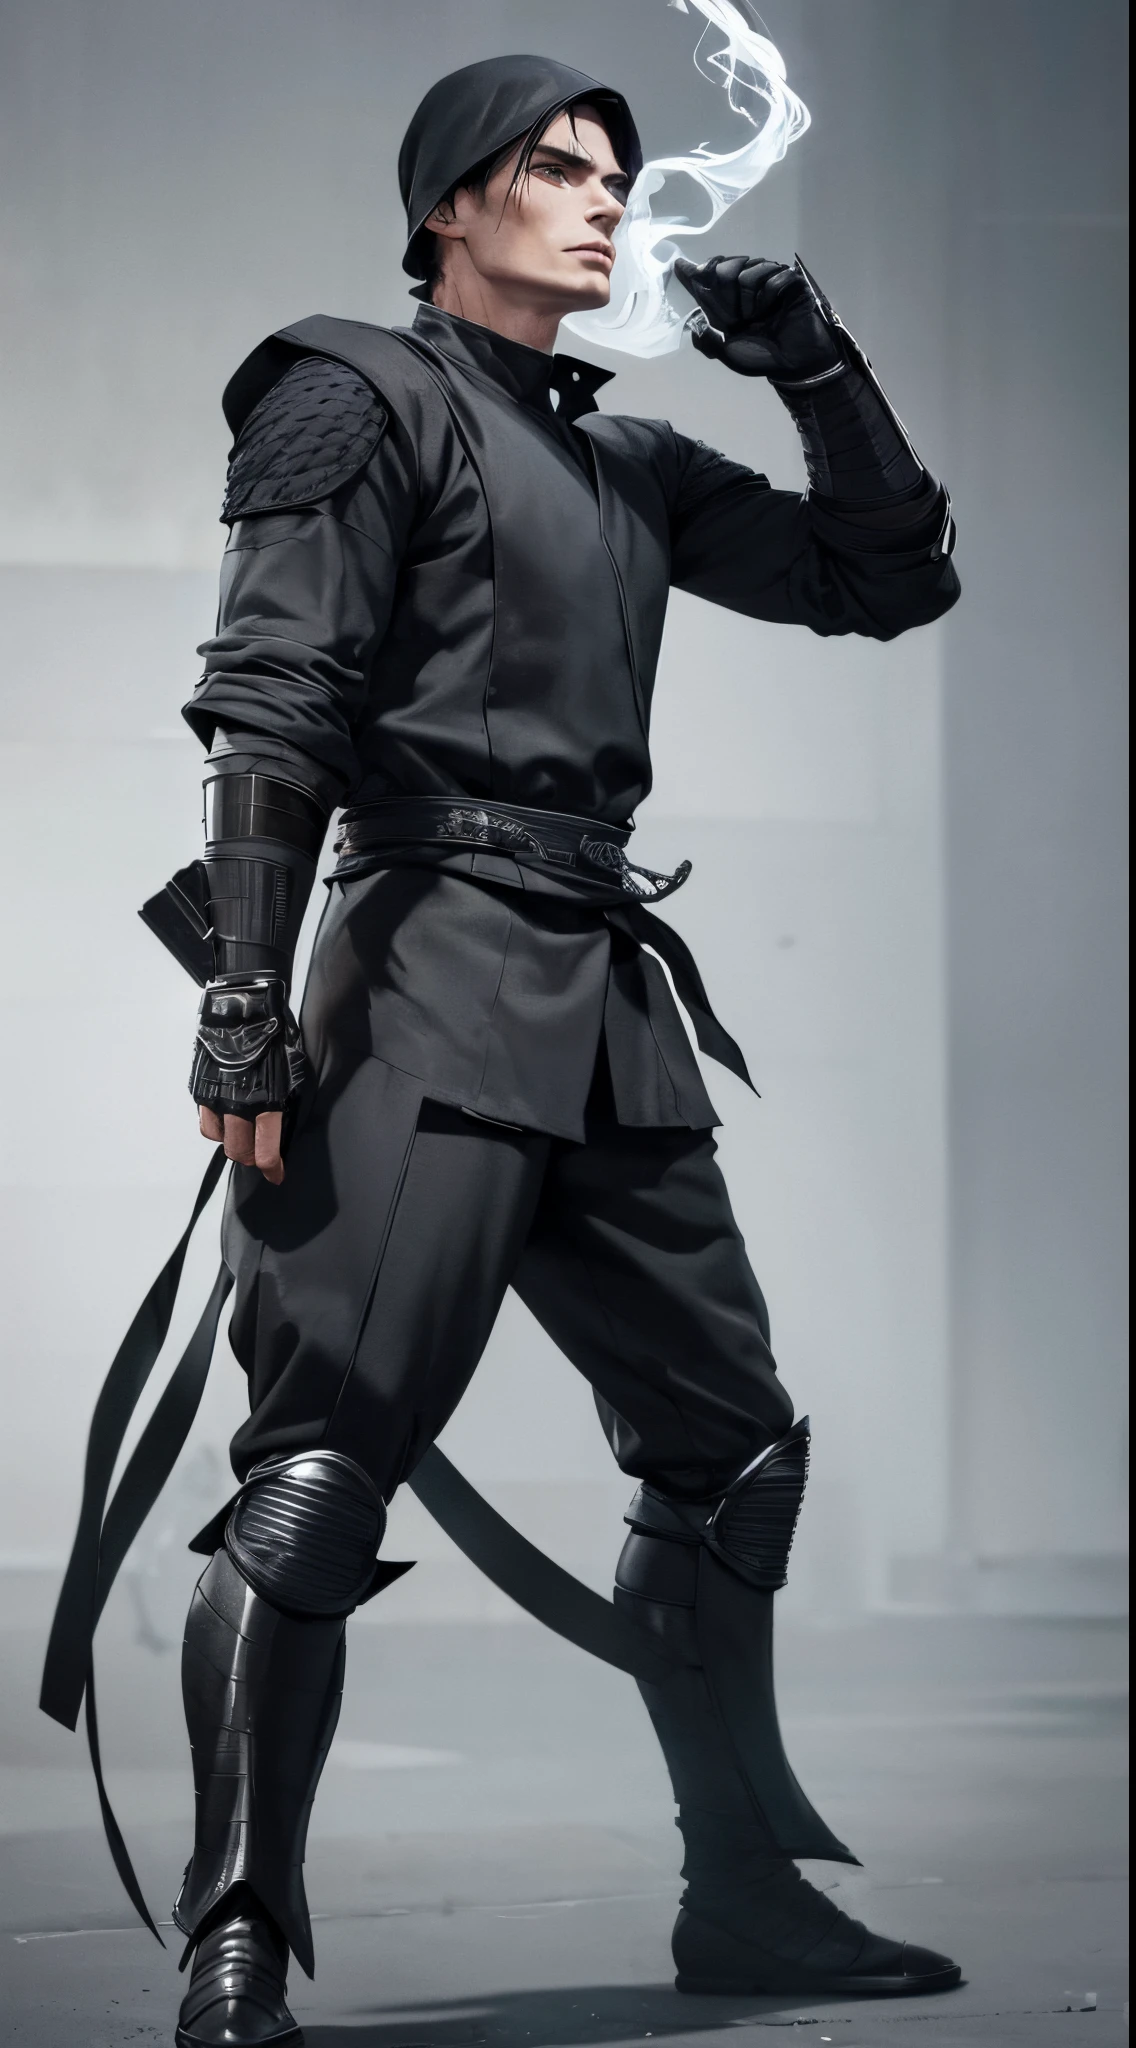 actor ((Cillian Murphy)) as Smoke from Mortal Kombat, fighting stance, light gray ninja-like outfit, black ninja mask, light gray gloves, light gray boots, intricate, high detail, sharp focus, dramatic, photorealistic painting art by greg rutkowski